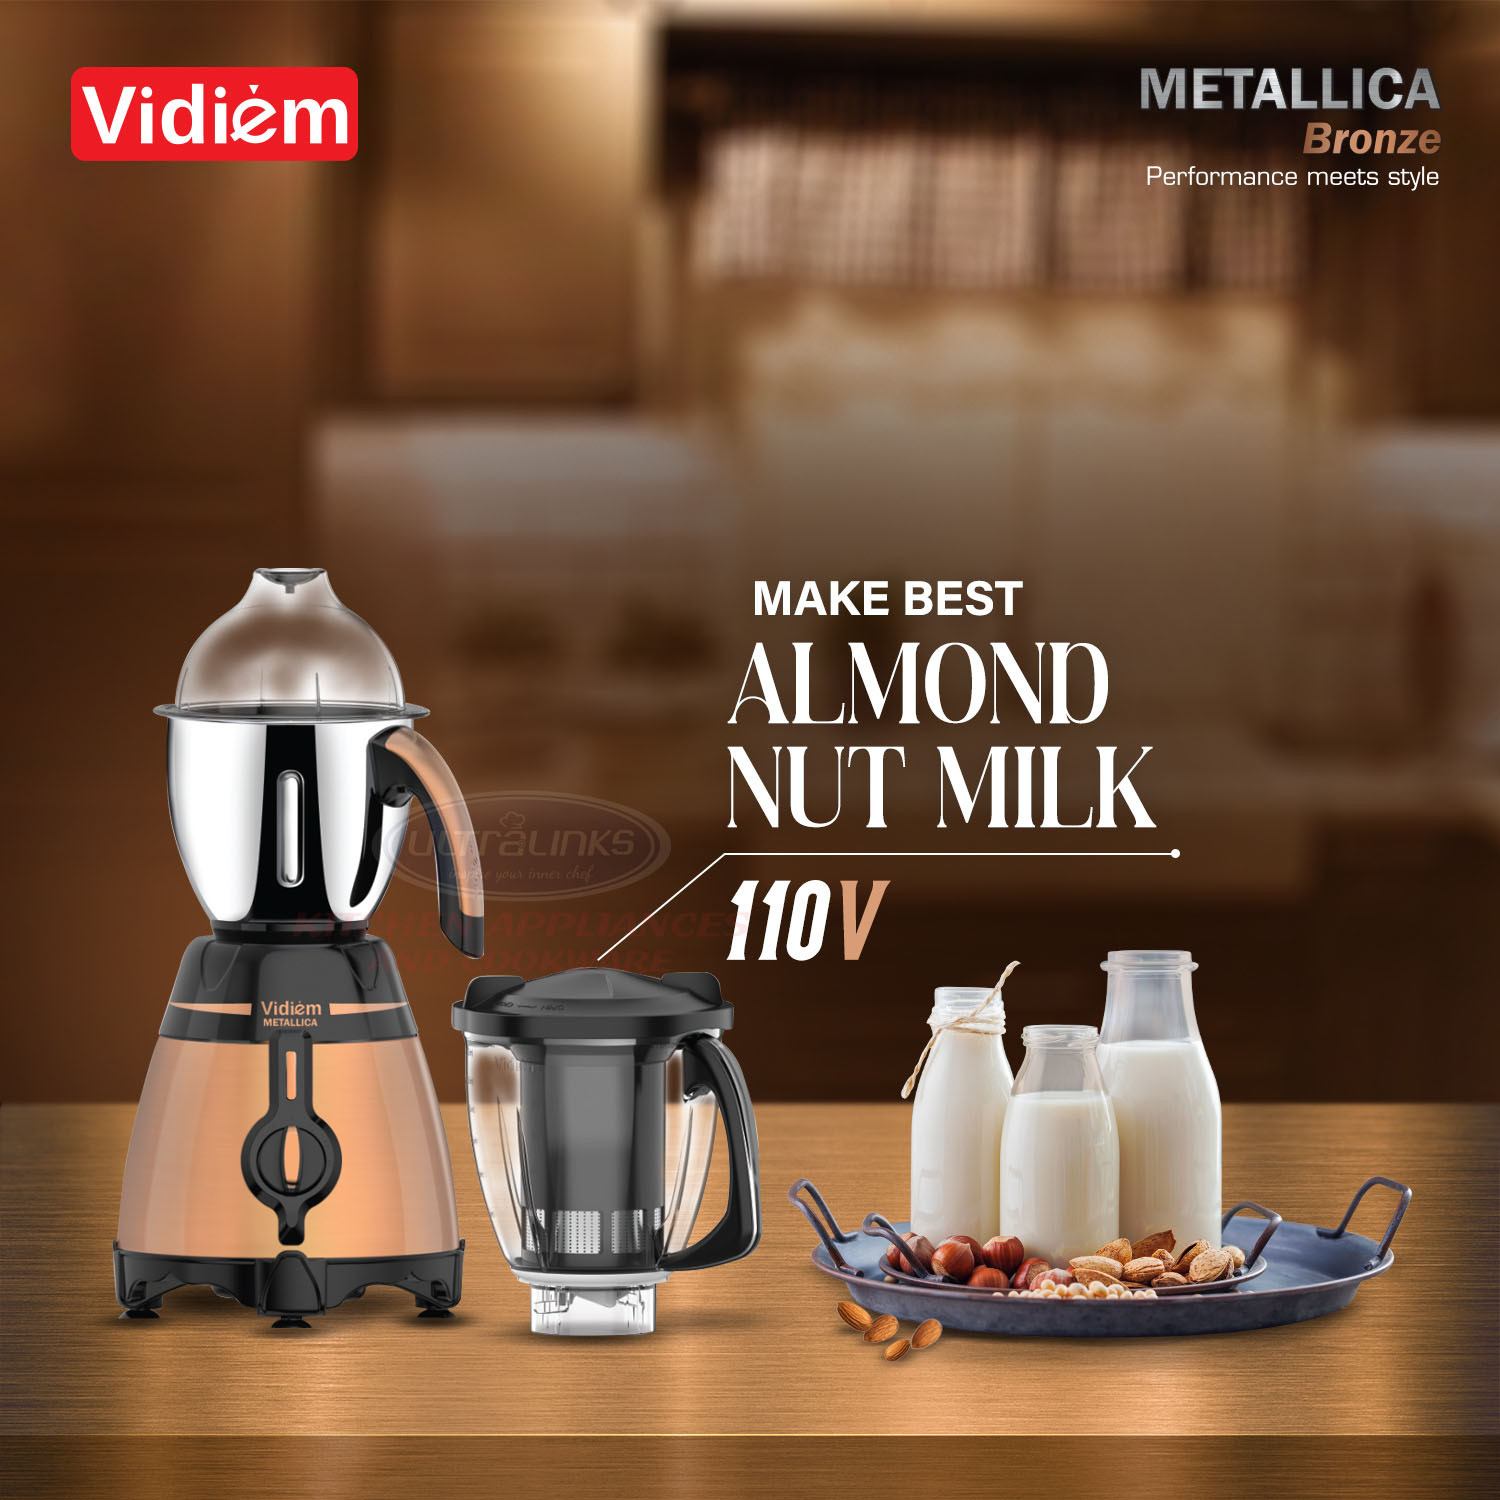 vidiem-metallica-bronze-750w-110v-stainless-steel-jars-indian-mixer-grinder-with-almond-nut-milk-spice-coffee-grinder-jar-for-use-in-canada-usa4